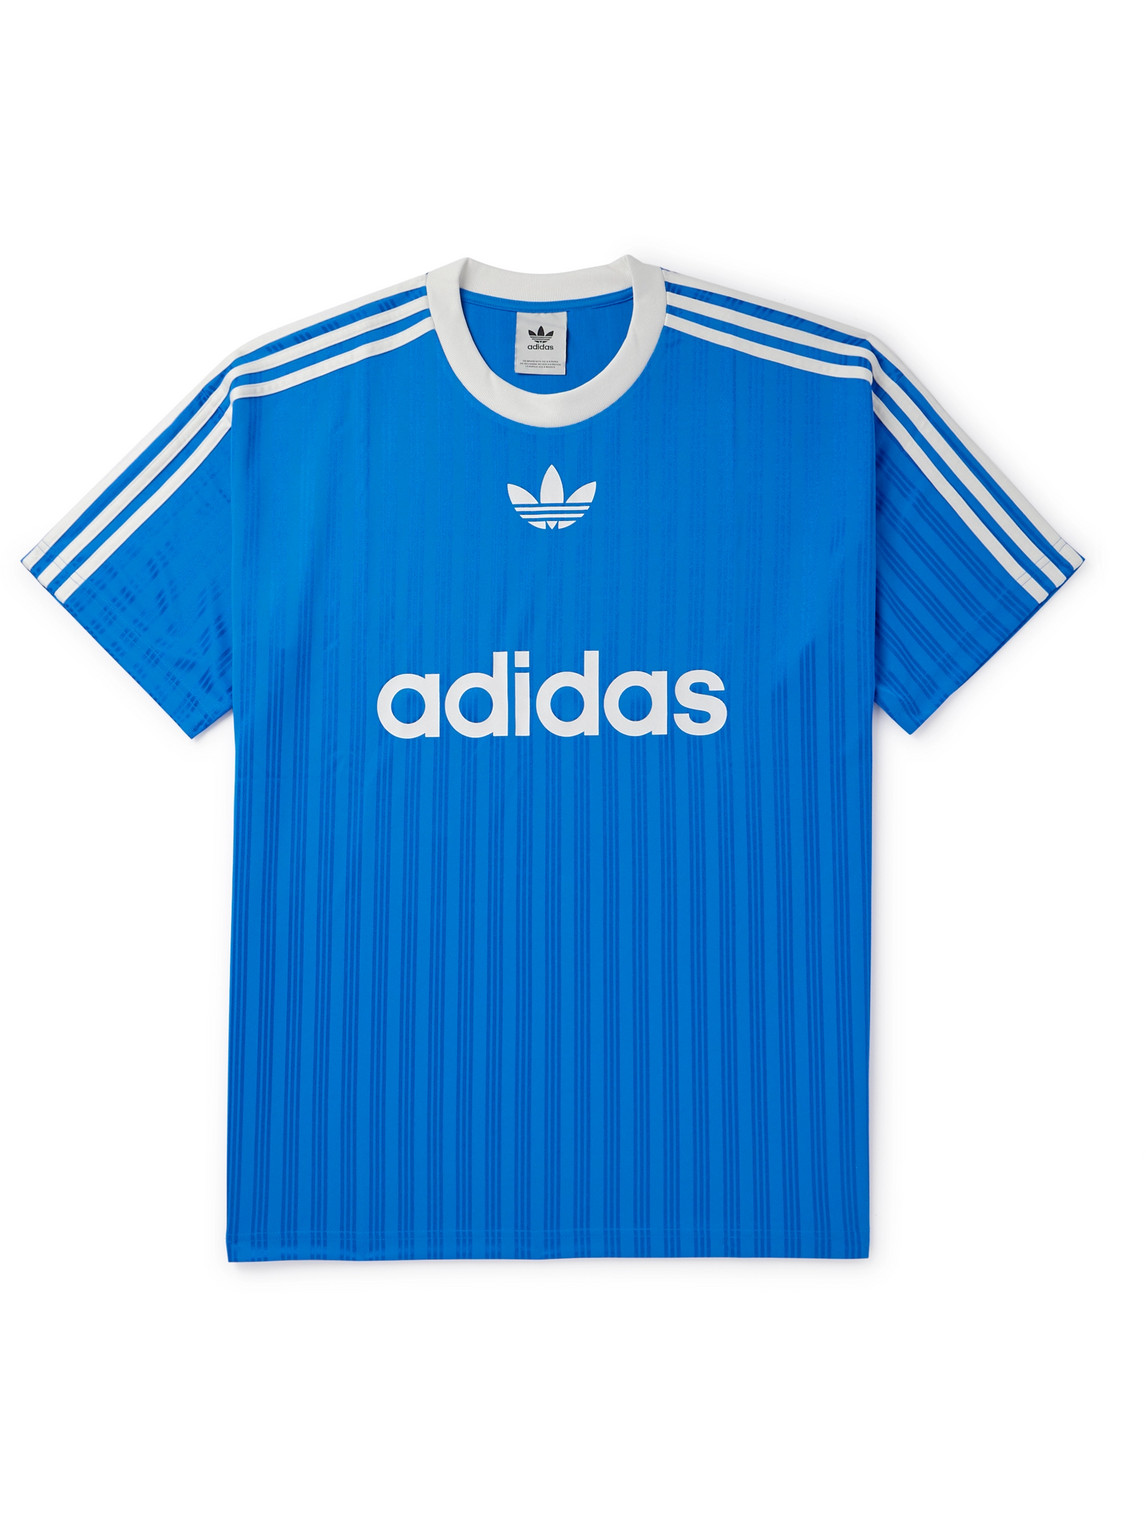 adidas Originals - Adicolor Logo-Print Recycled-Piqué T-Shirt - Men - Blue - XL von adidas Originals